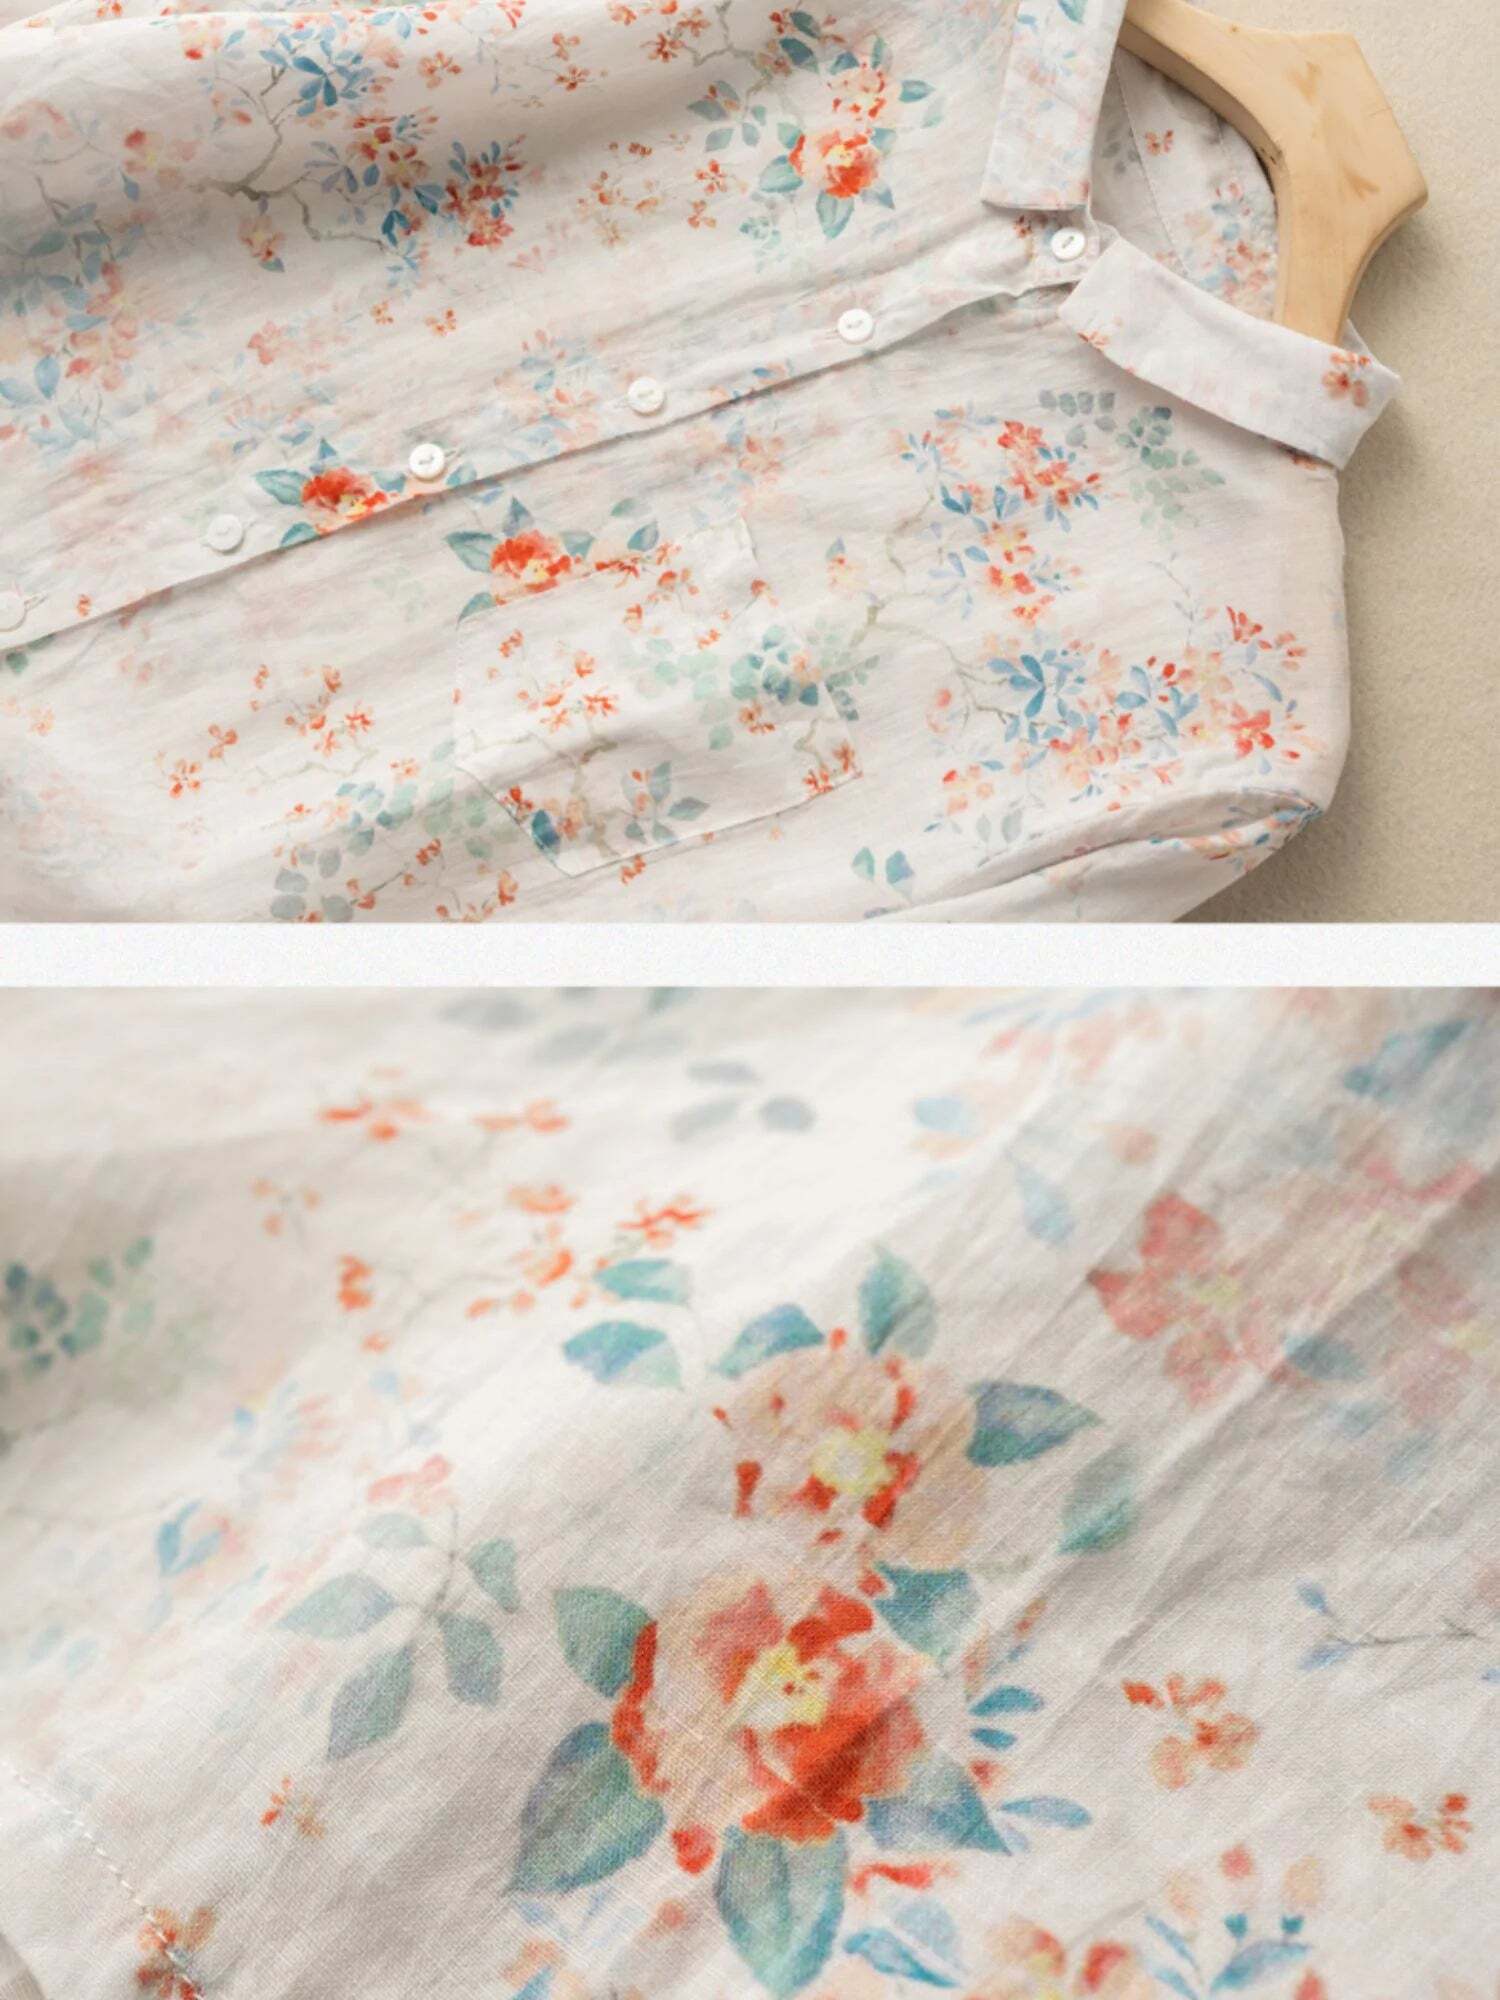 Floral Print Long Sleeve Casual Linen Shirt Top